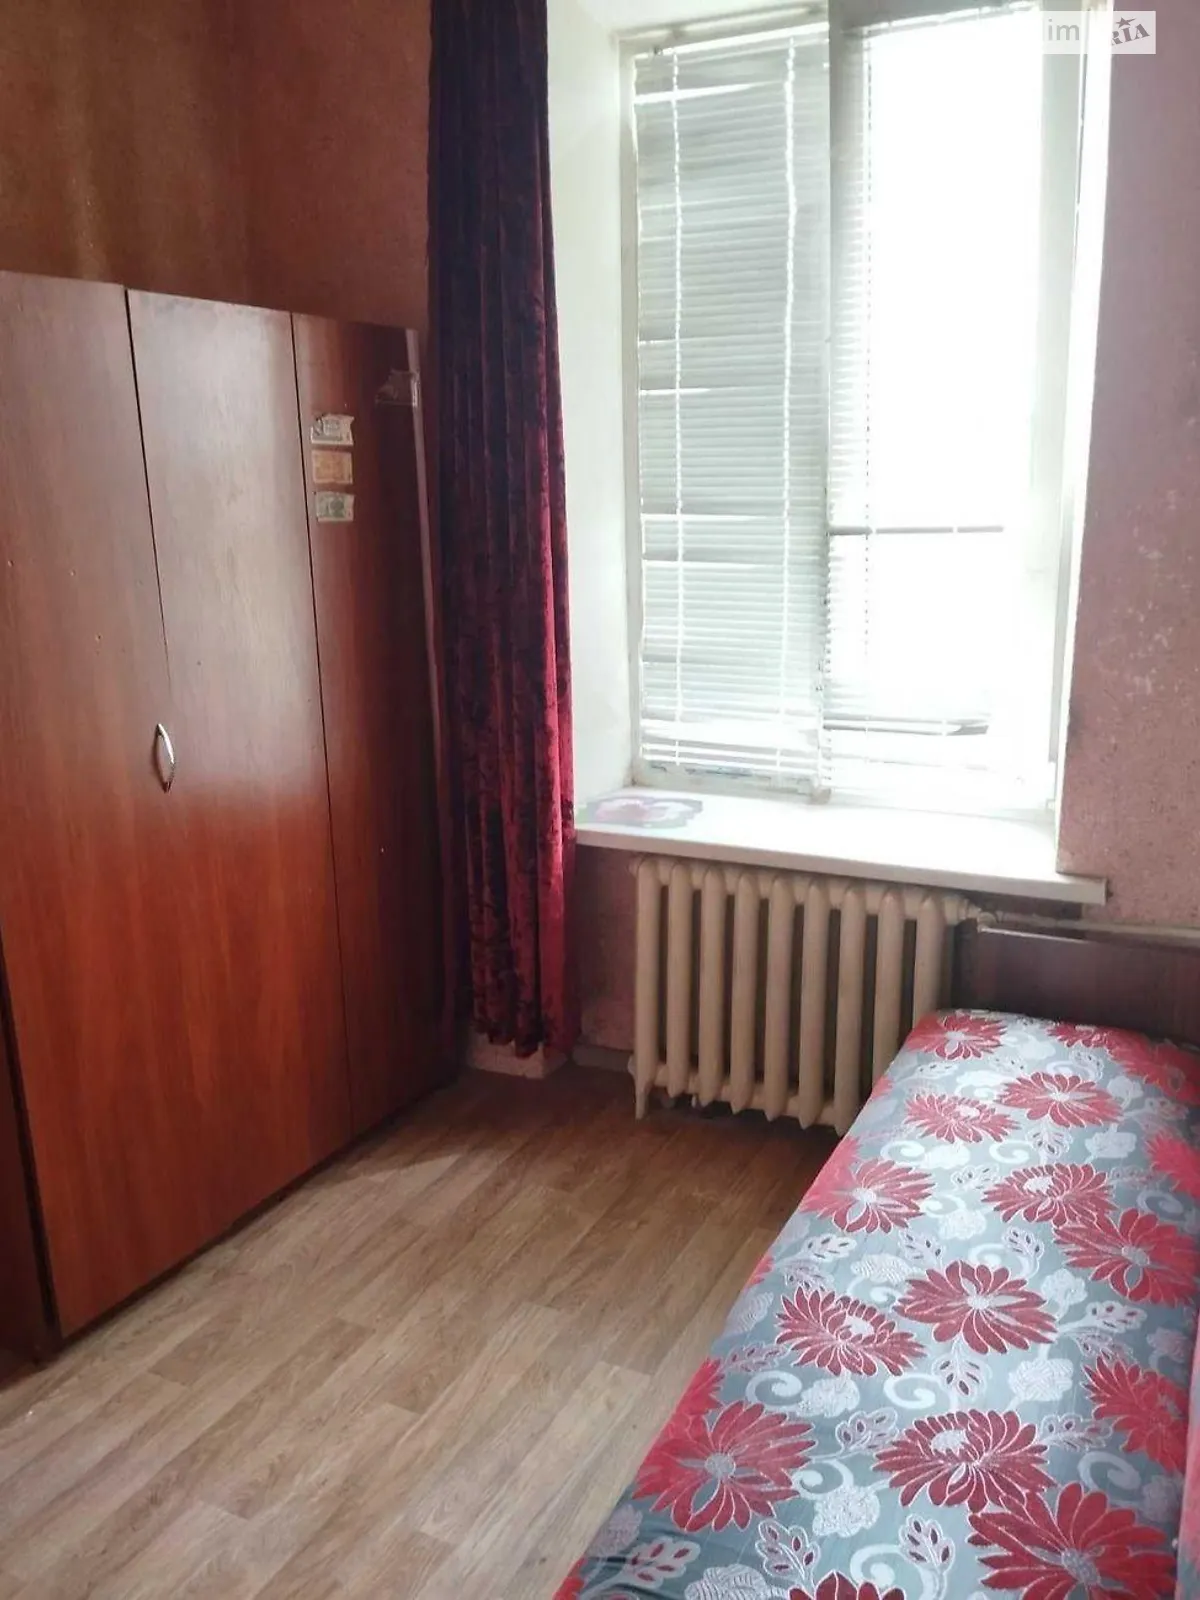 Продается комната 19 кв. м в Харькове - фото 3